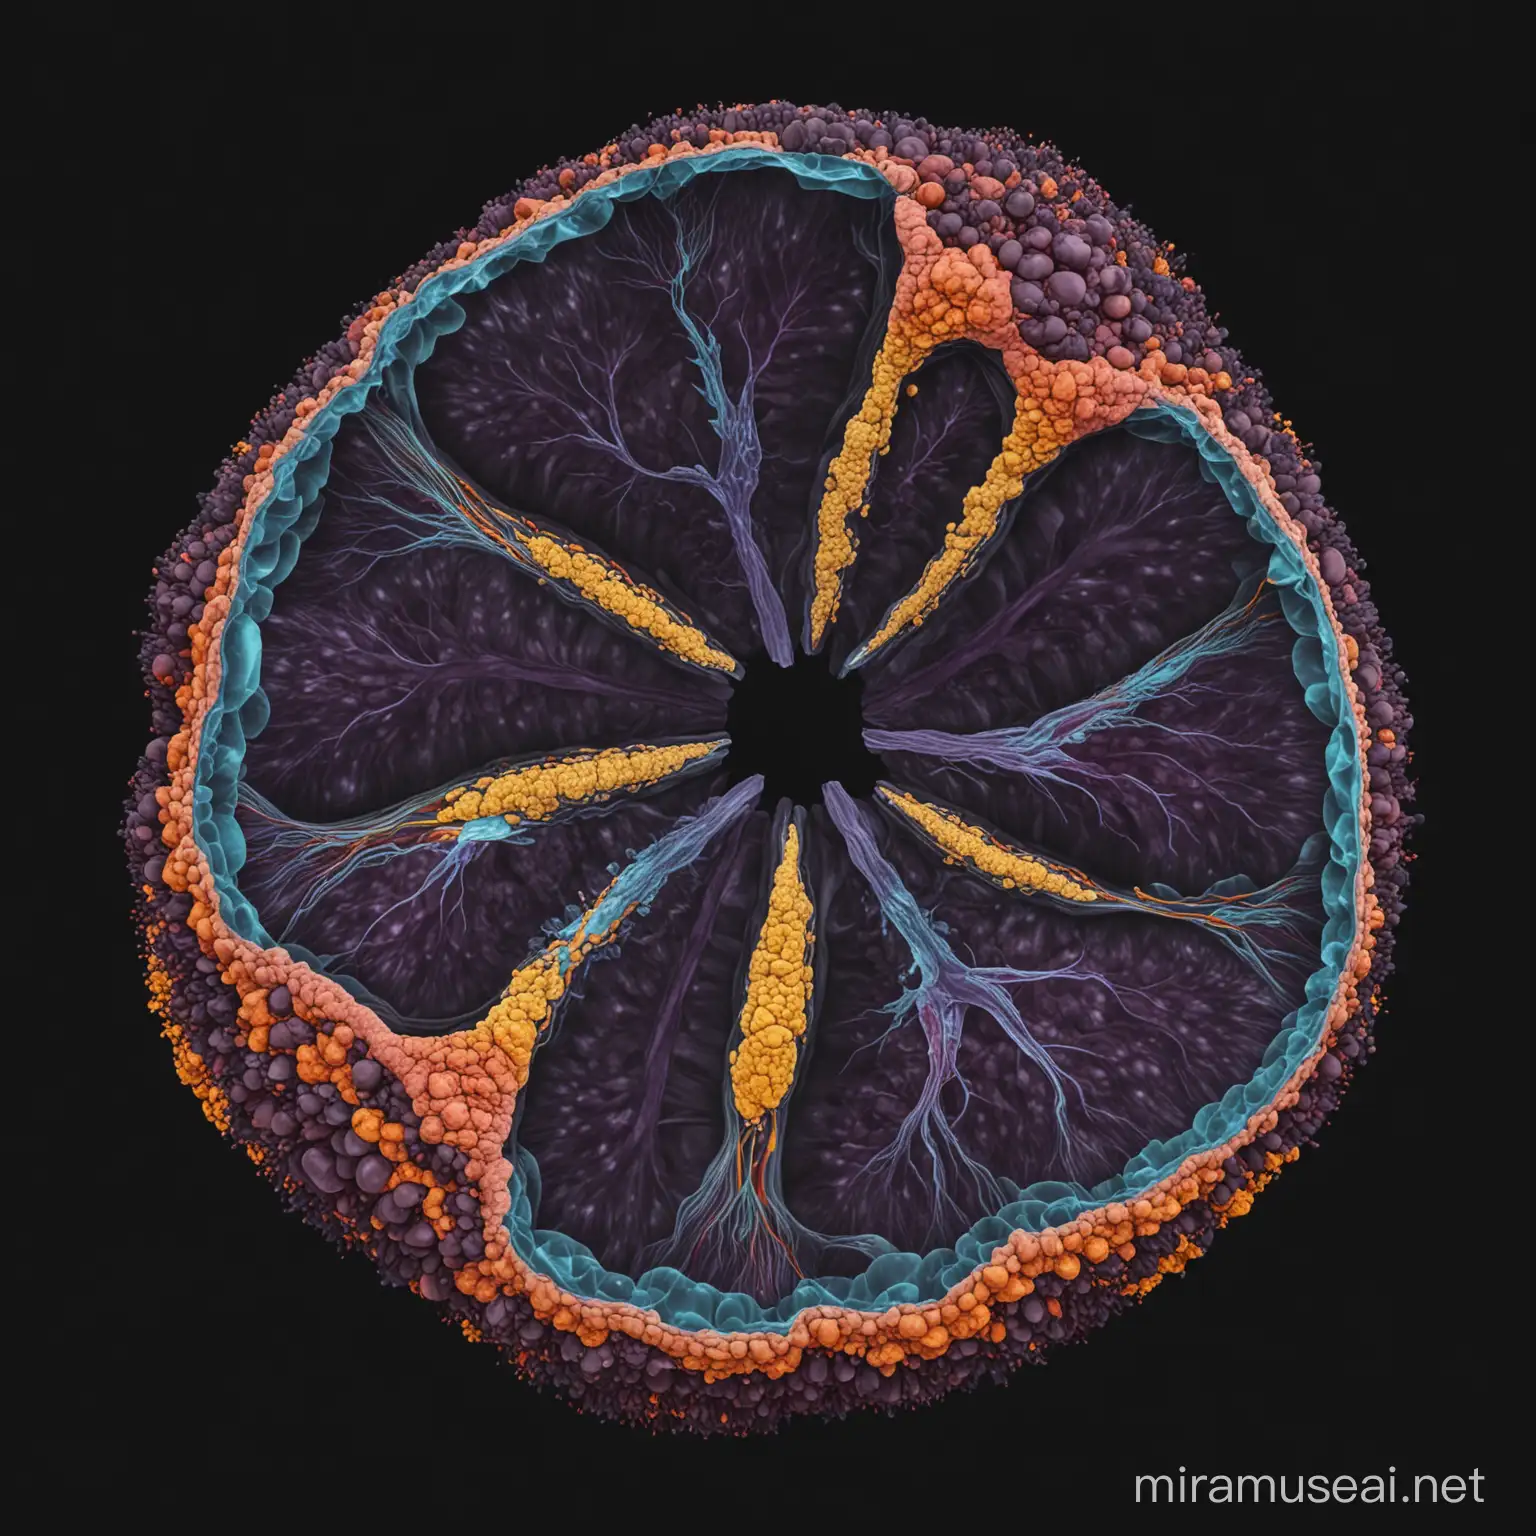 3D transparent pancreatic round islet of Langerhans on black background